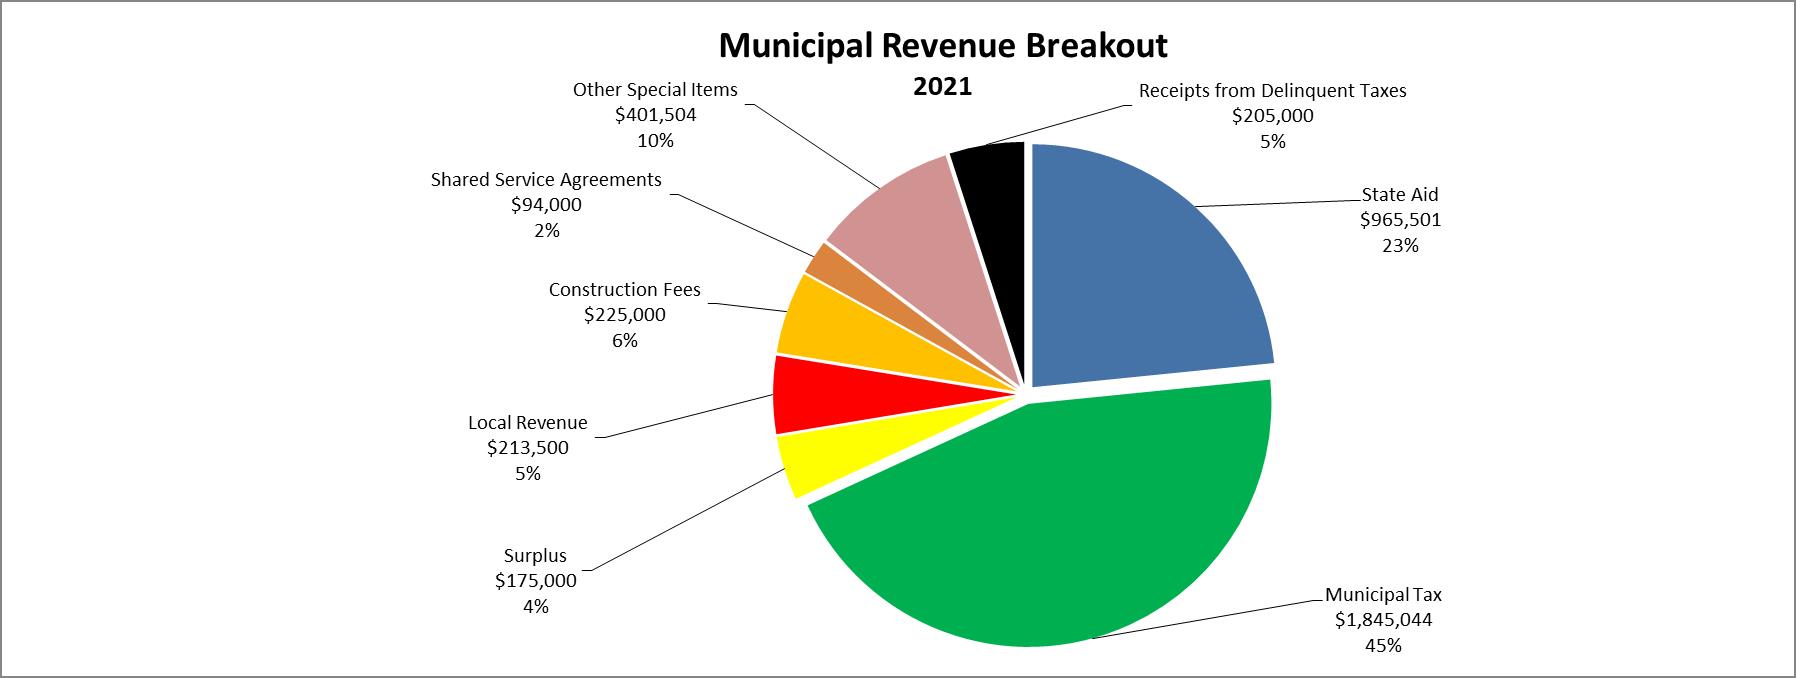 Muni Revenue Breakout Pie Chart